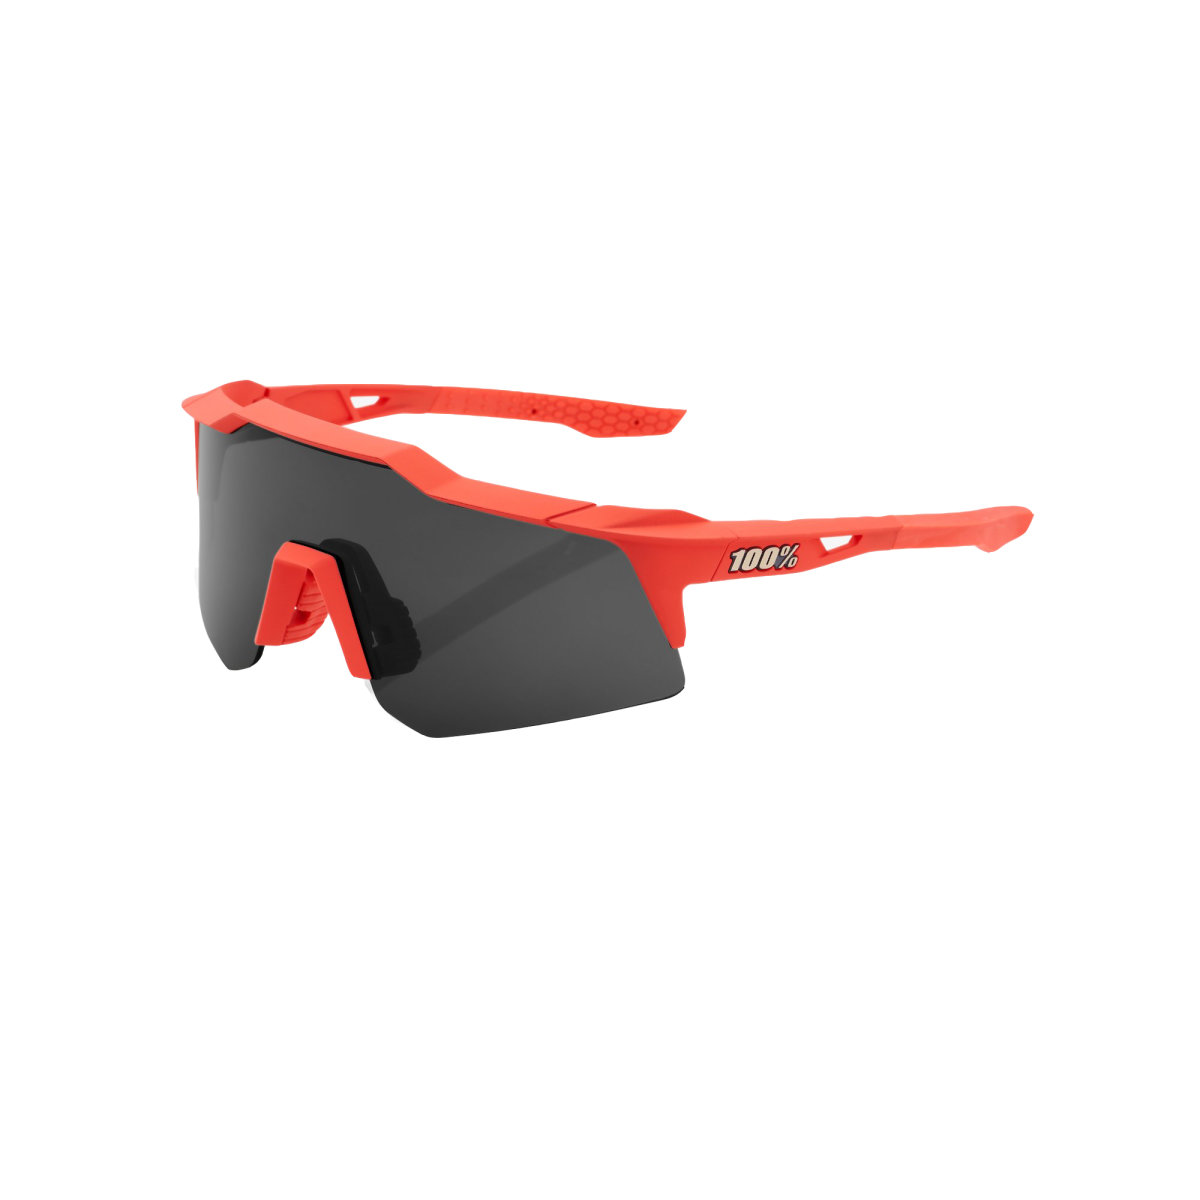 Очки Ride 100% Speedcraft XS - Soft Tact Coral - Smoke Lens, Colored Lens 61005-068-57